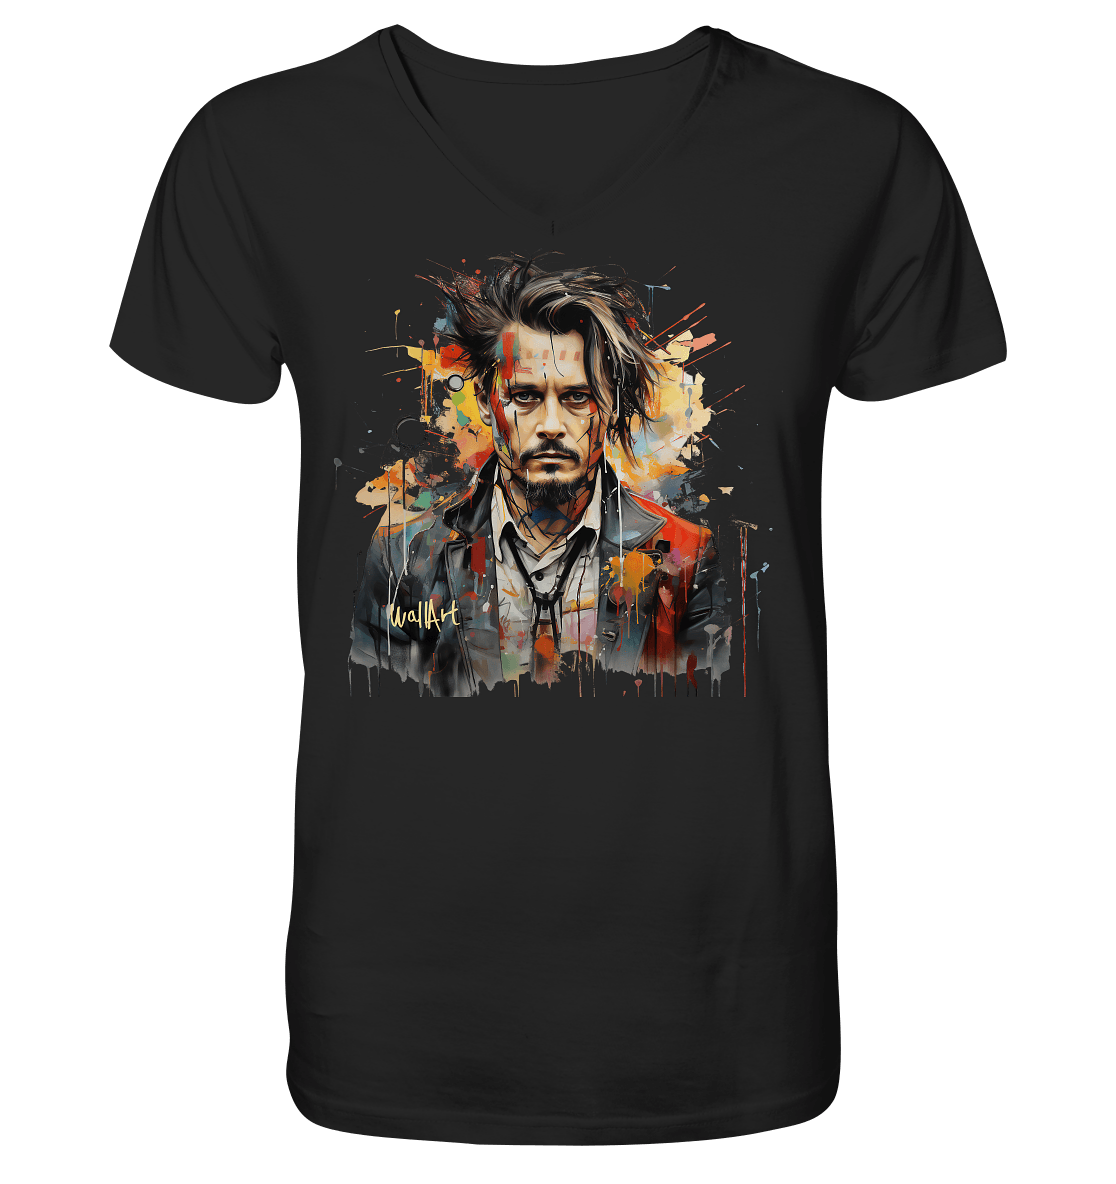 WallArt - Johnny Depp - Mens Organic V-Neck Shirt - Snapshirts